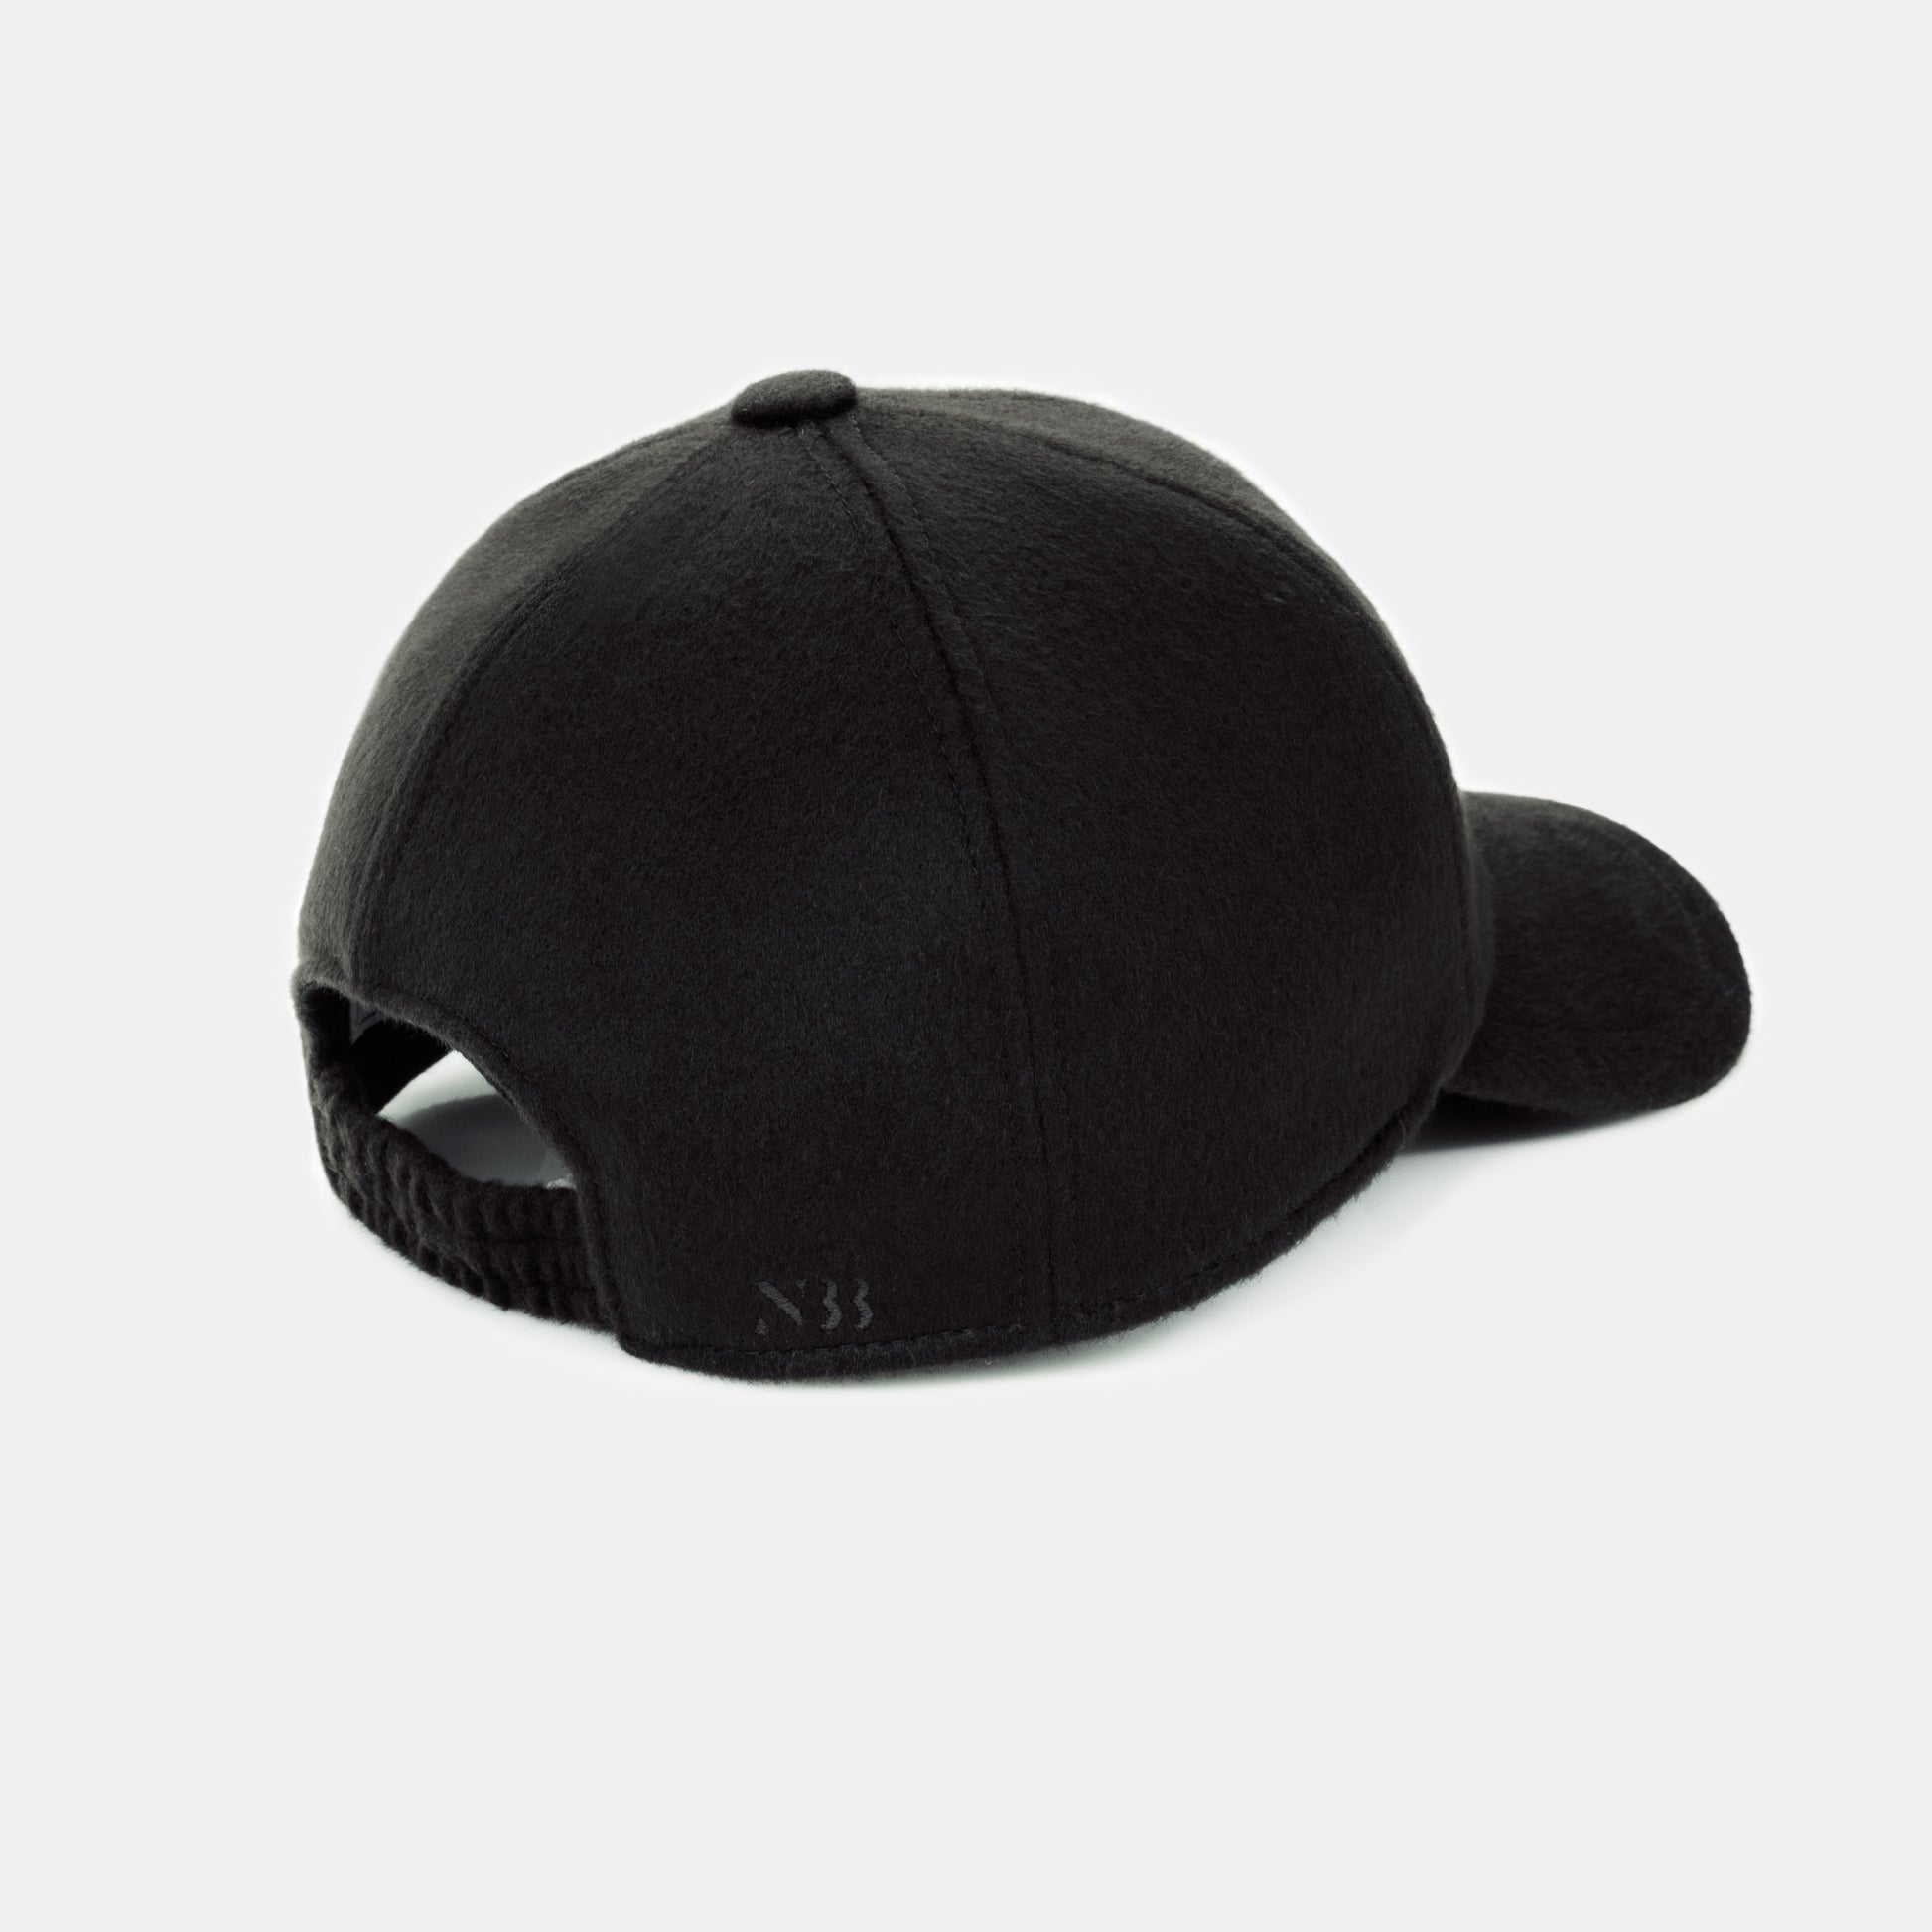 N33 BASEBALL CAP 100% cashmere cap made in Italy luxury baseball cap black loro piana cashmere, unisex, high quality handmade cap artisan-made hat 